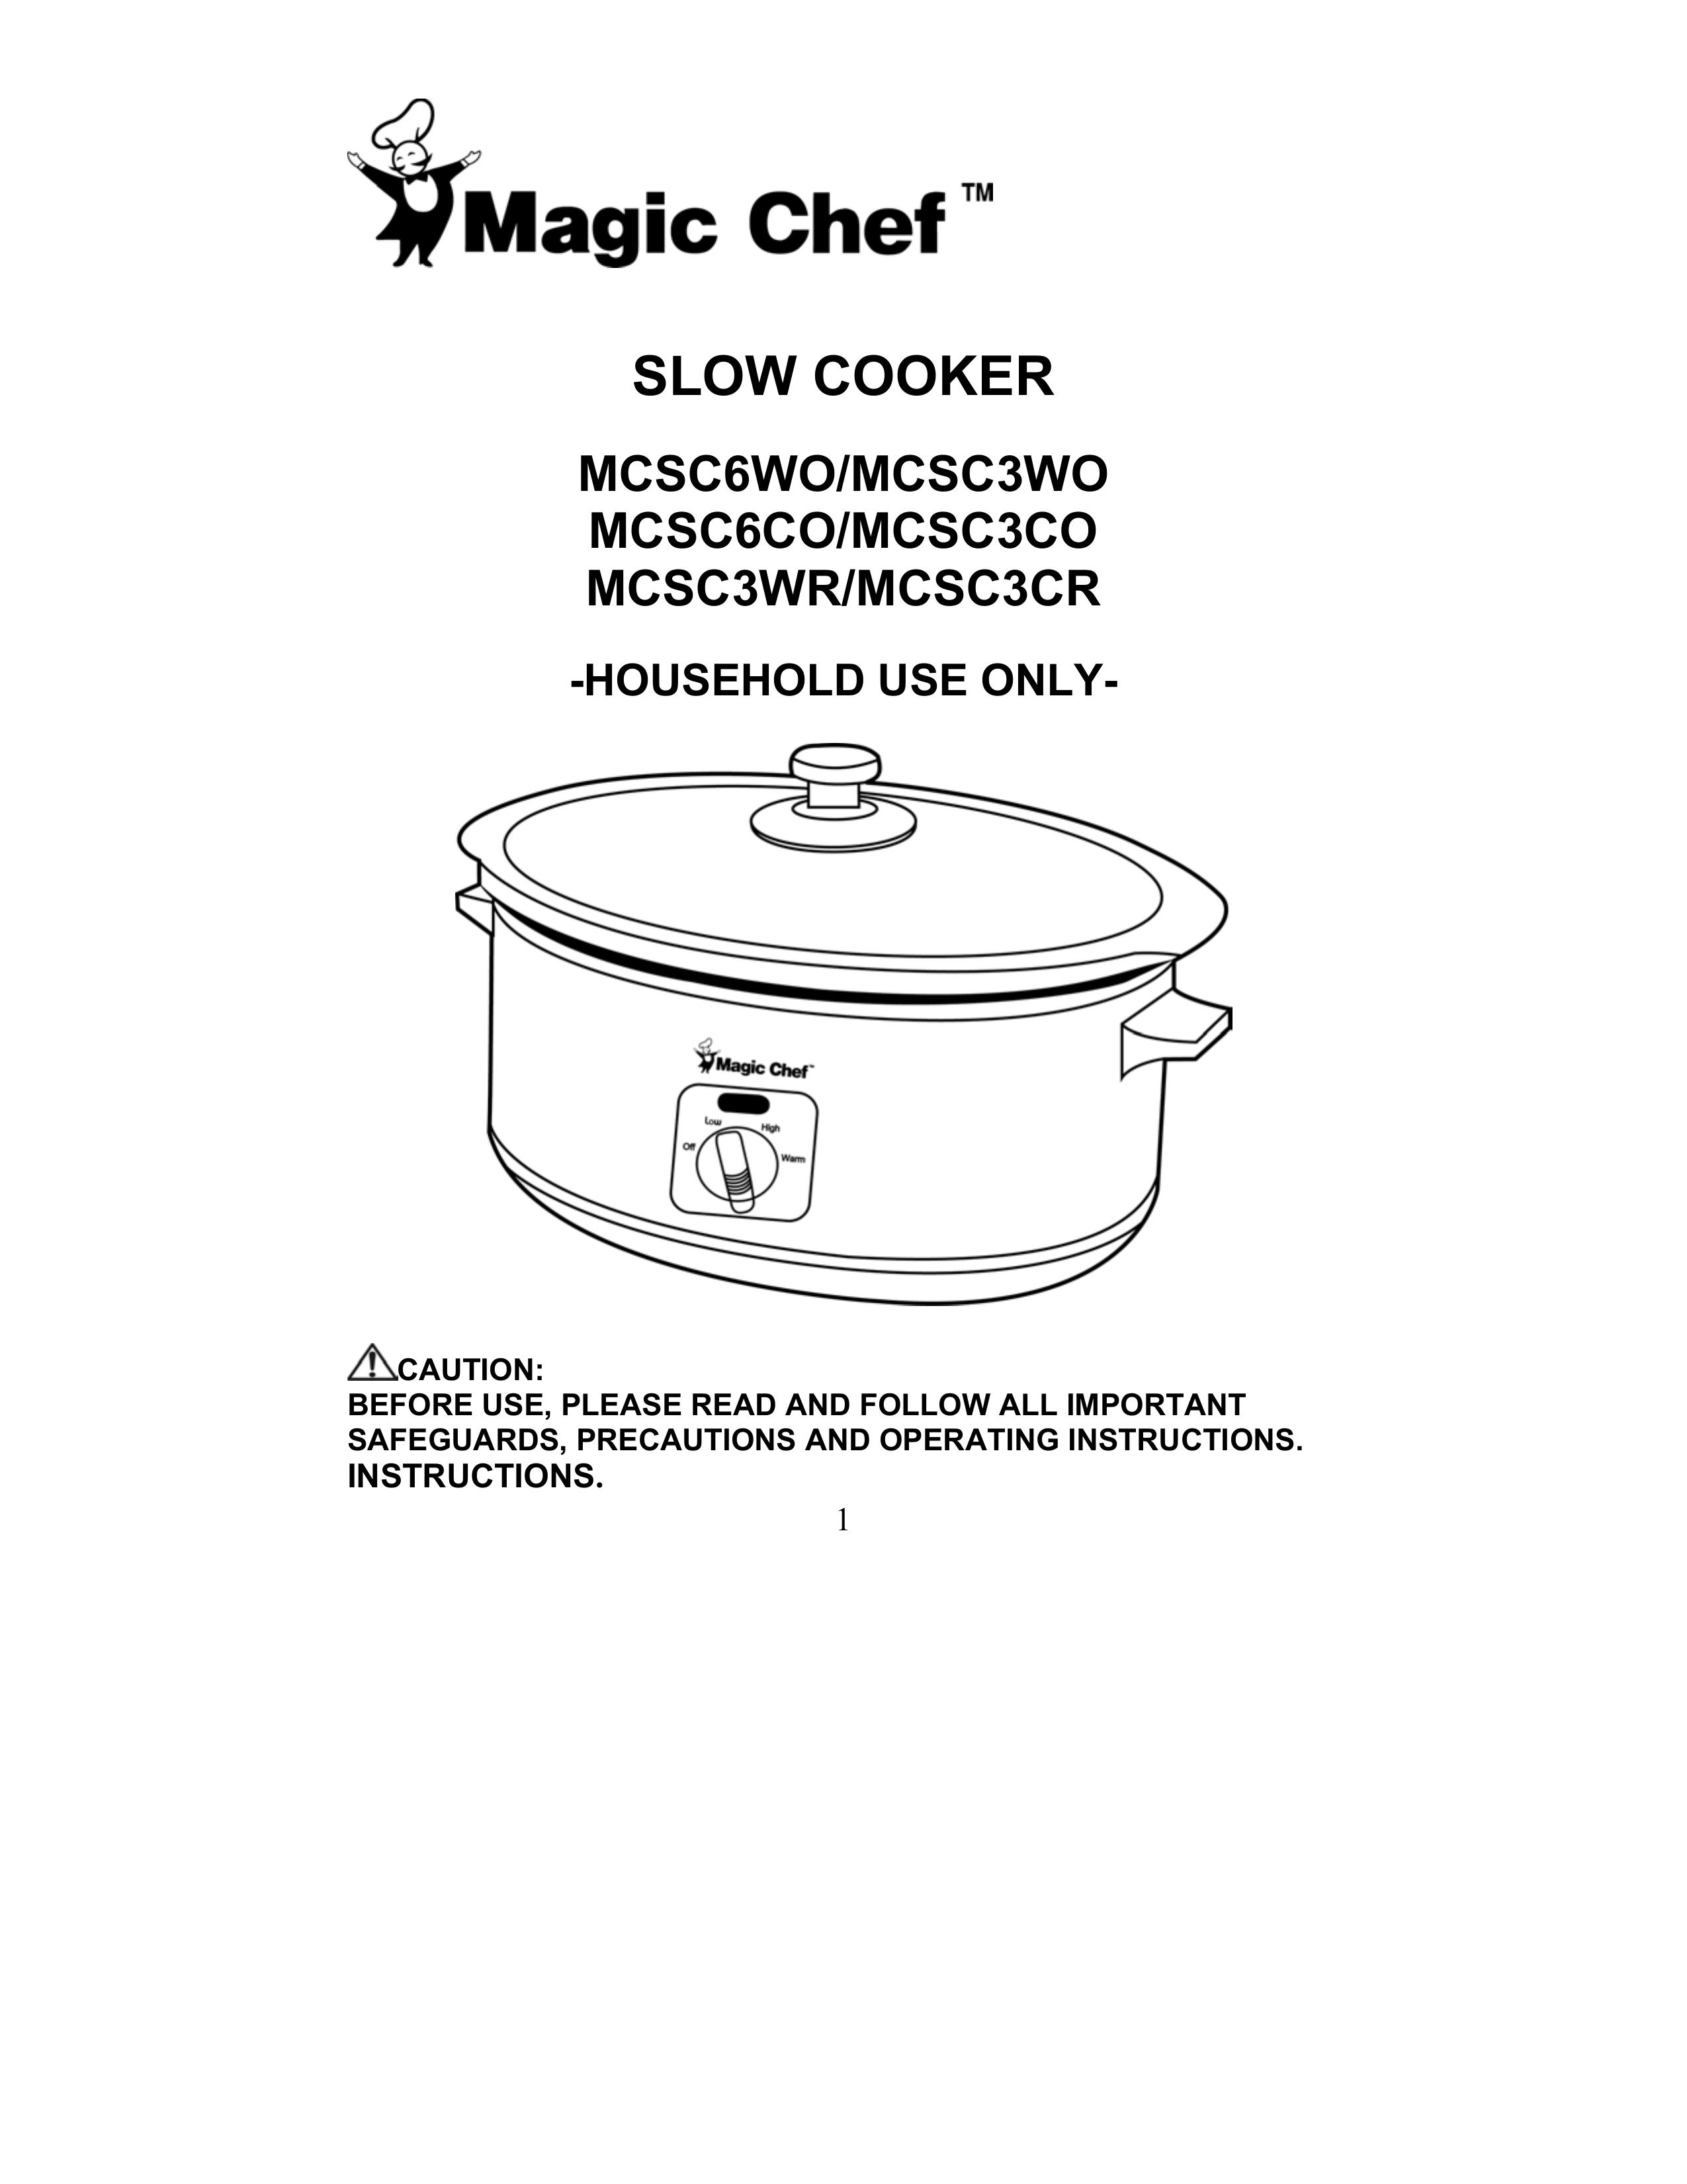 Magic Chef MCSC3CRs Slow Cooker User Manual